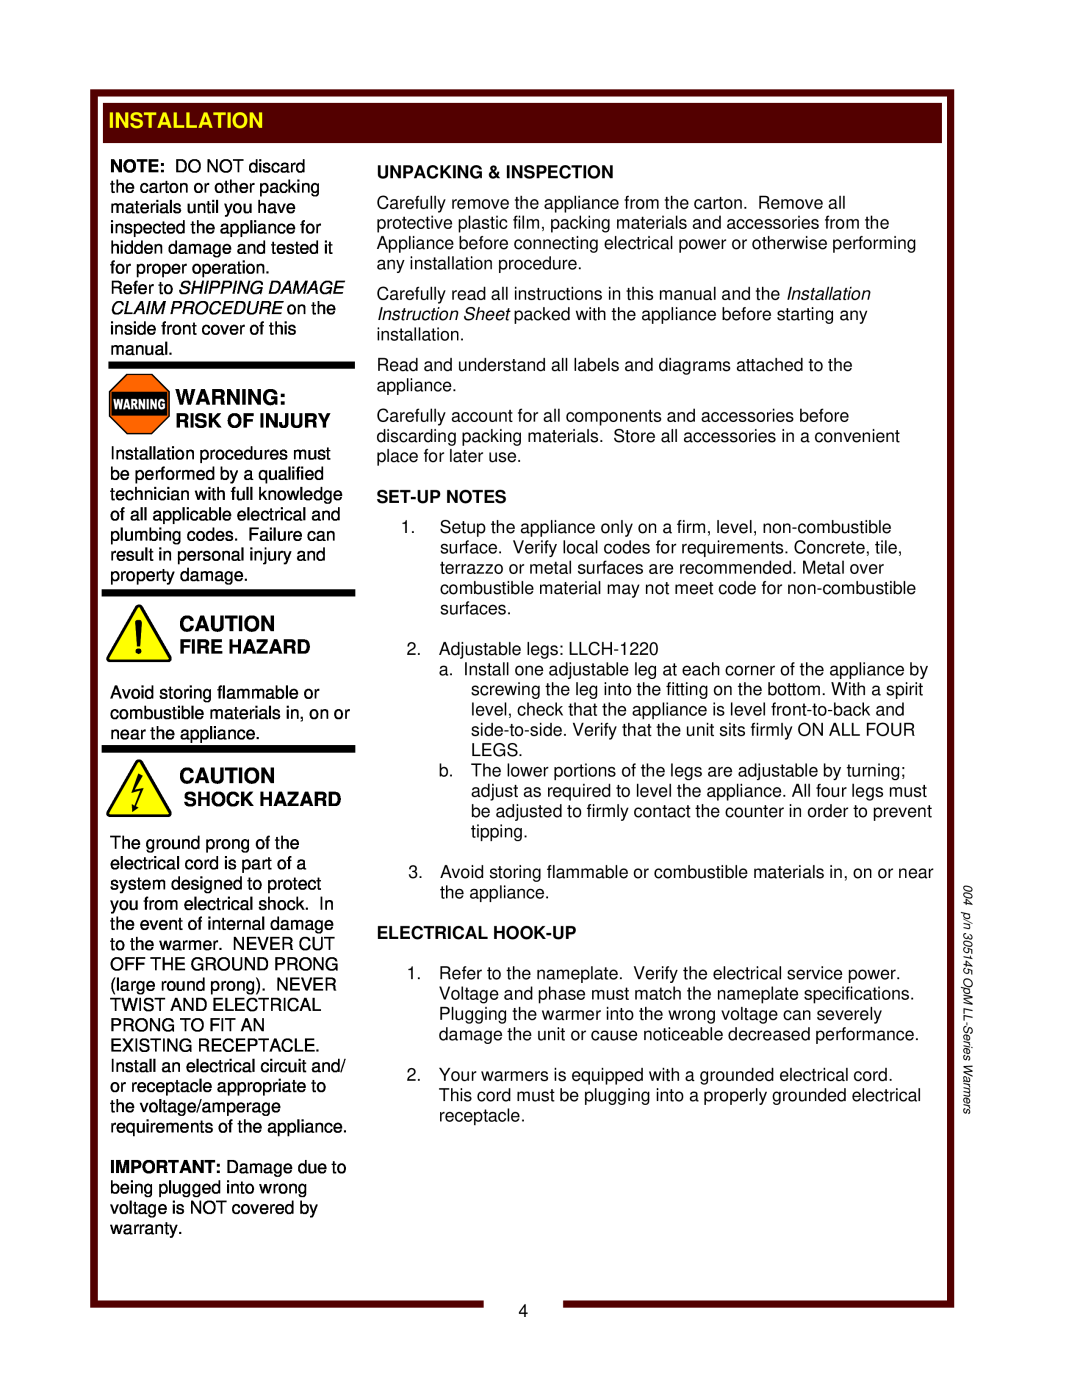 Wells SC-1, SC-7, 6411 Risk Of Injury, Fire Hazard, Shock Hazard, Unpacking & Inspection, Set-Upnotes, Electrical Hook-Up 